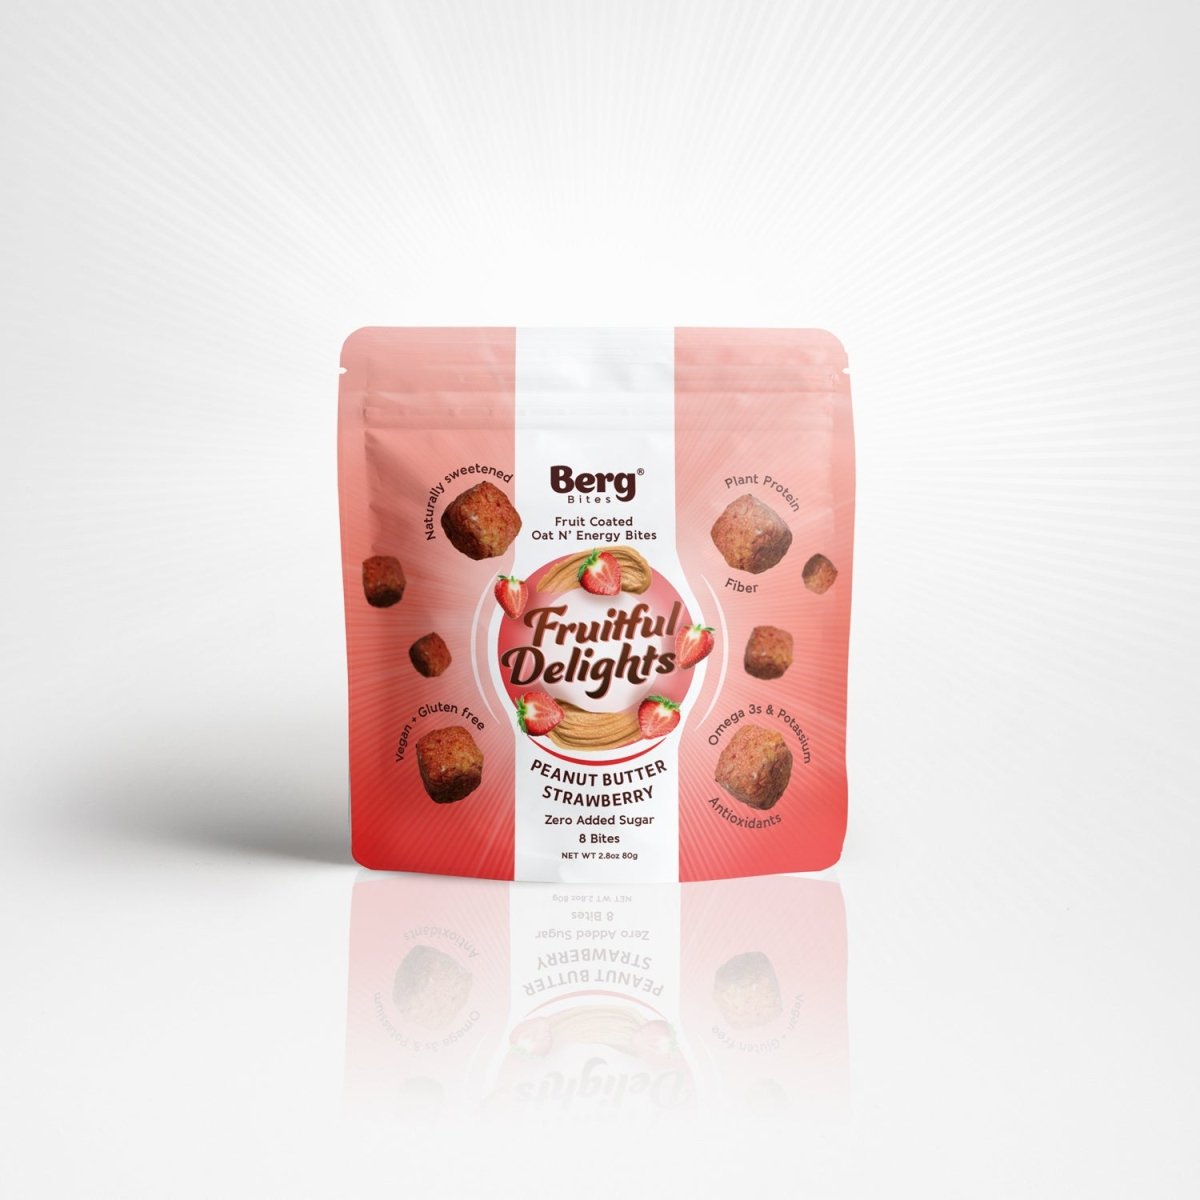 Fruitful Delights - Strawberry Peanut Butter - Berg Bites - Clean Energy